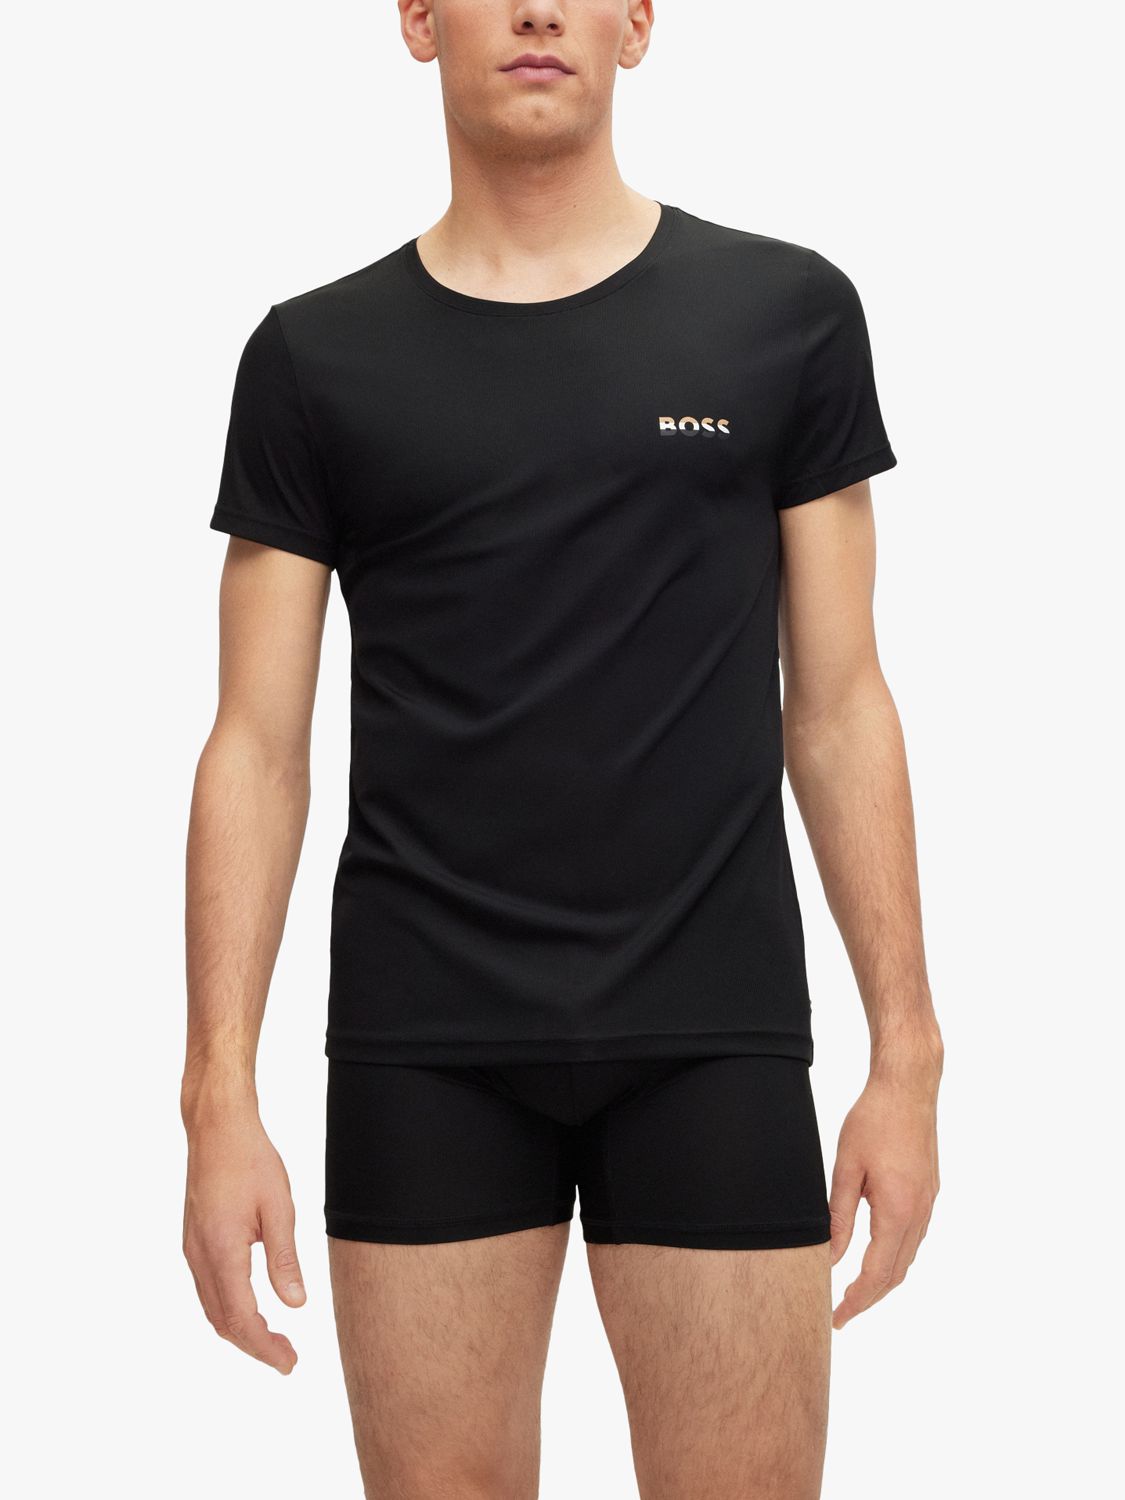 HUGO BOSS Slim Fit Underwear Logo T-Shirt, Black at John Lewis & Partners